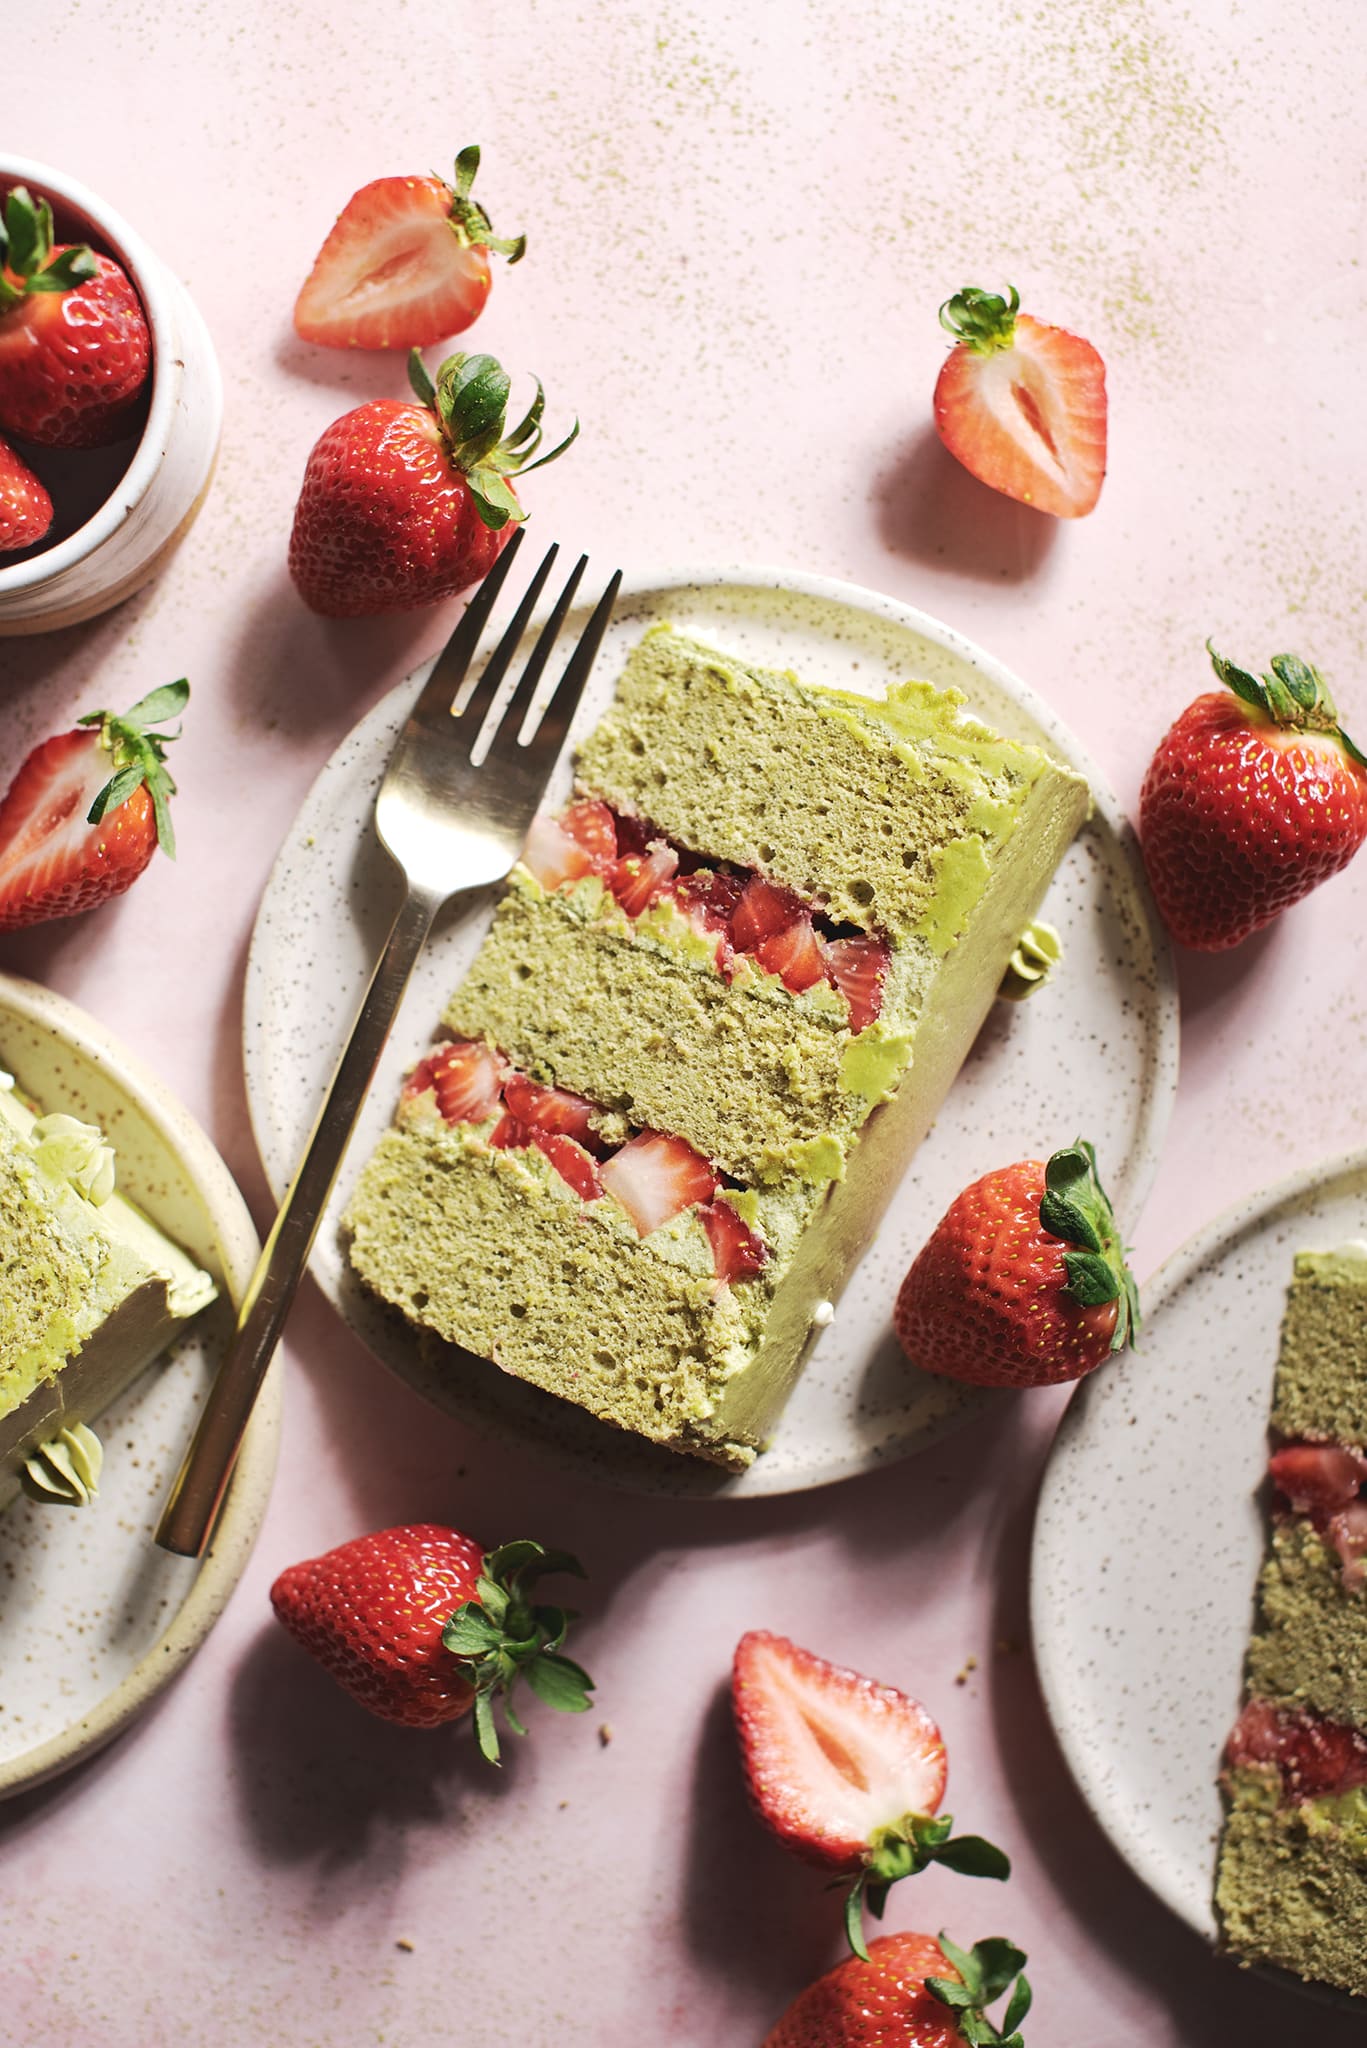 slice of matcha sponge cake with layers of strawberries